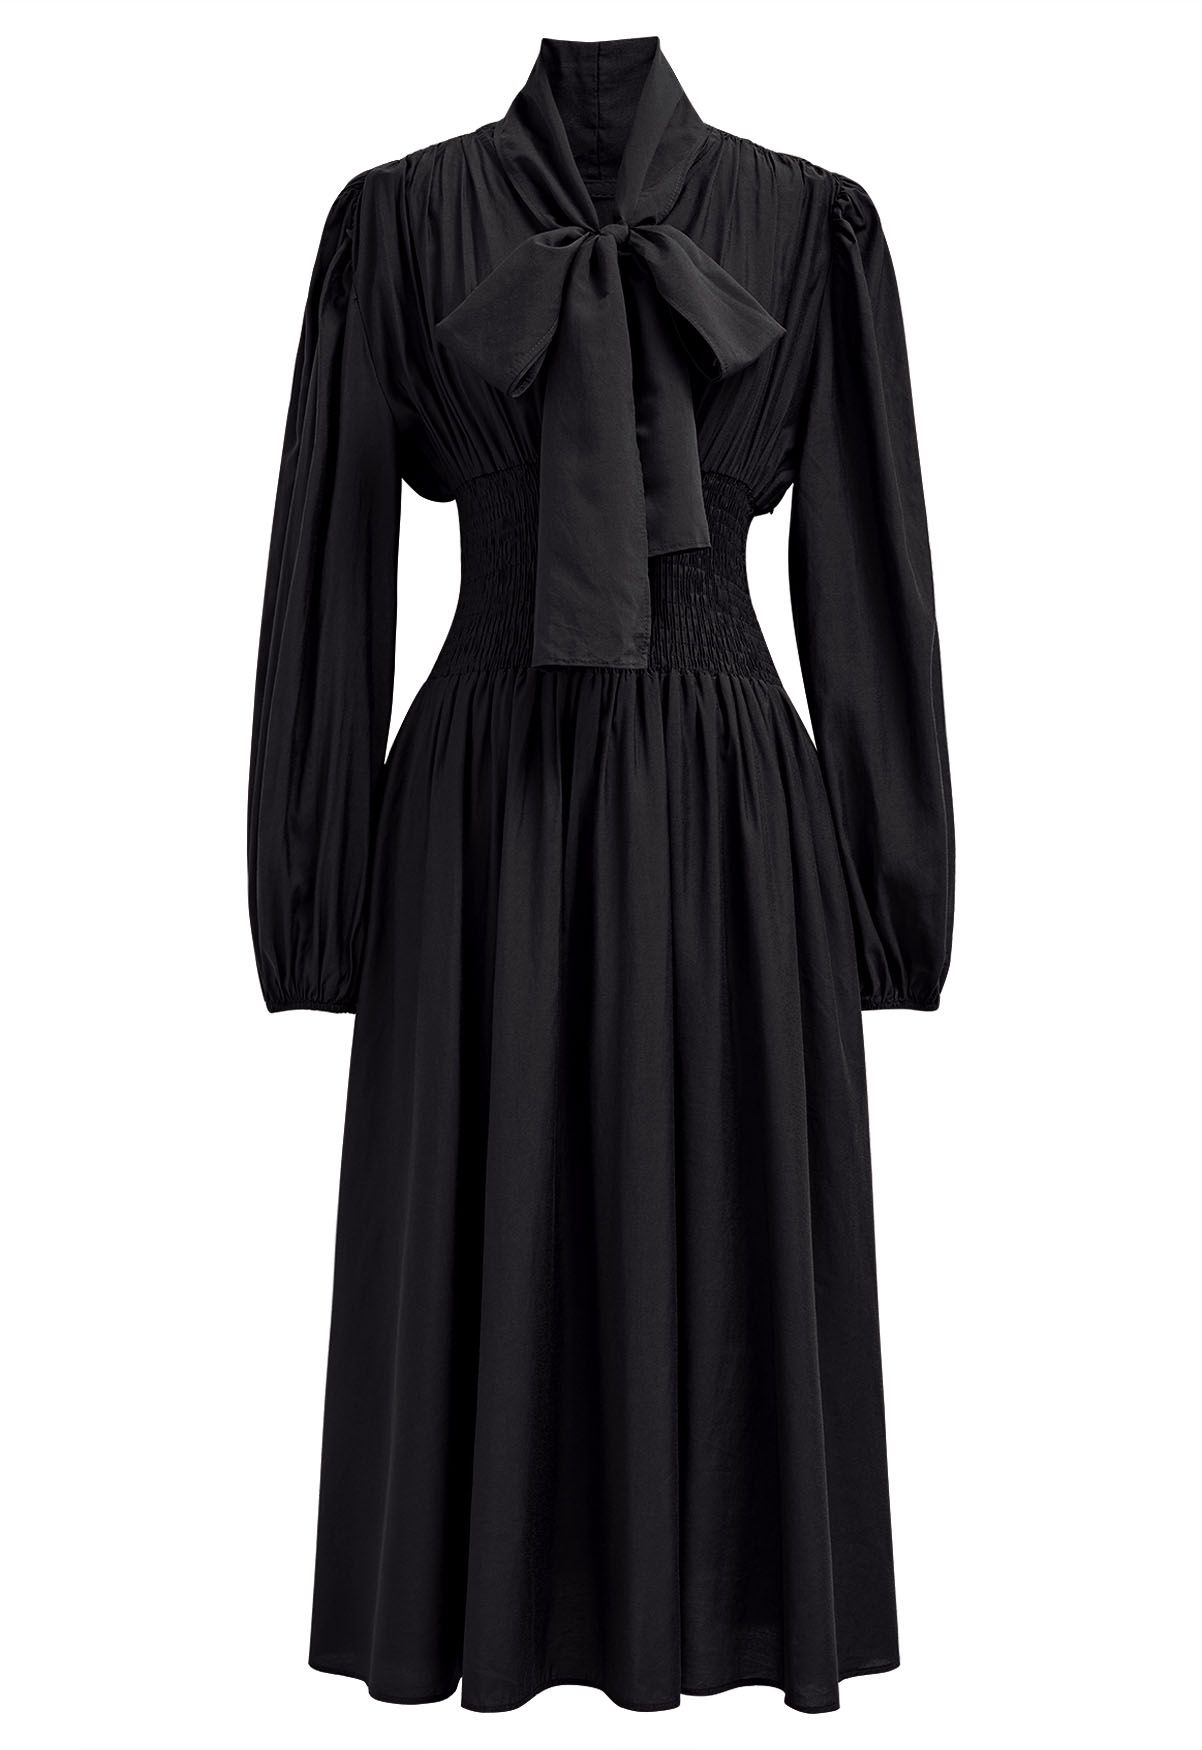 Self-Tie Bowknot Neckline Puff Sleeves Midi Dress in Black - Retro ...